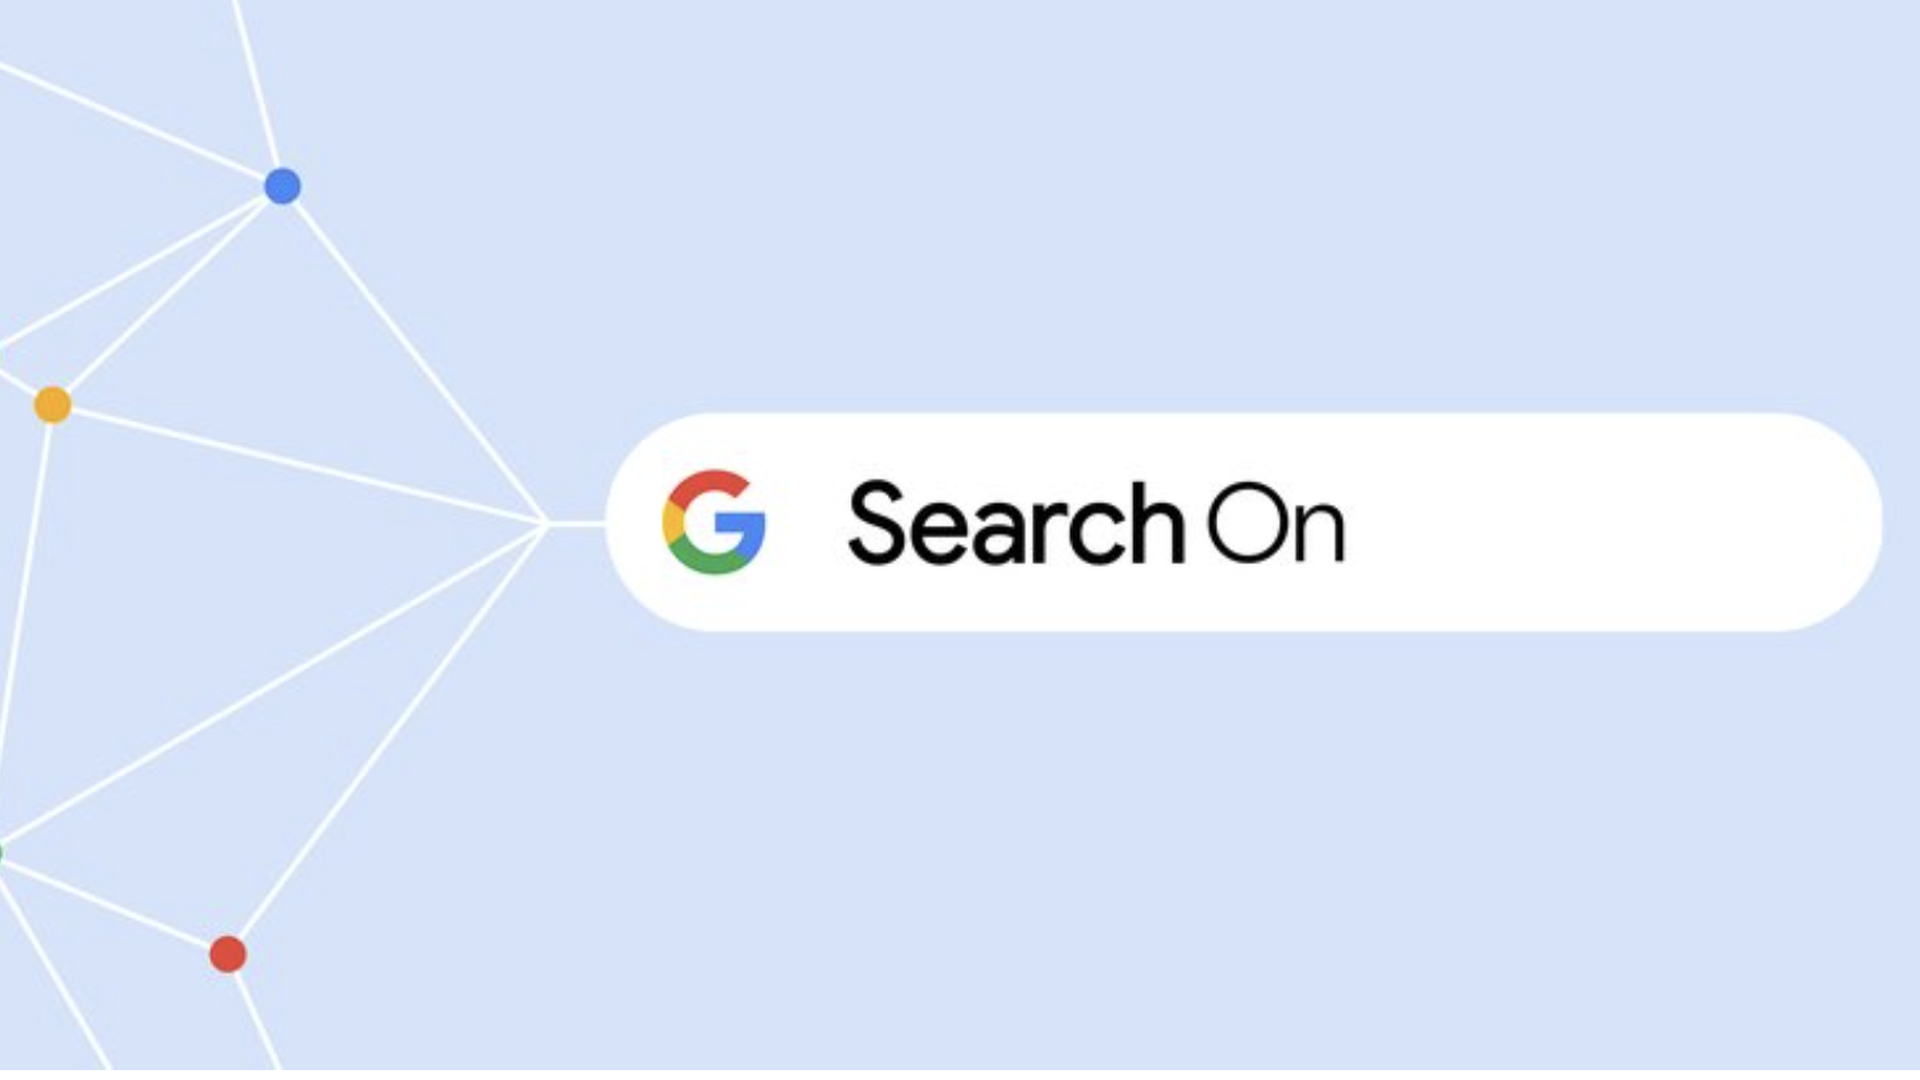 A screenshot of Google's Search On logo